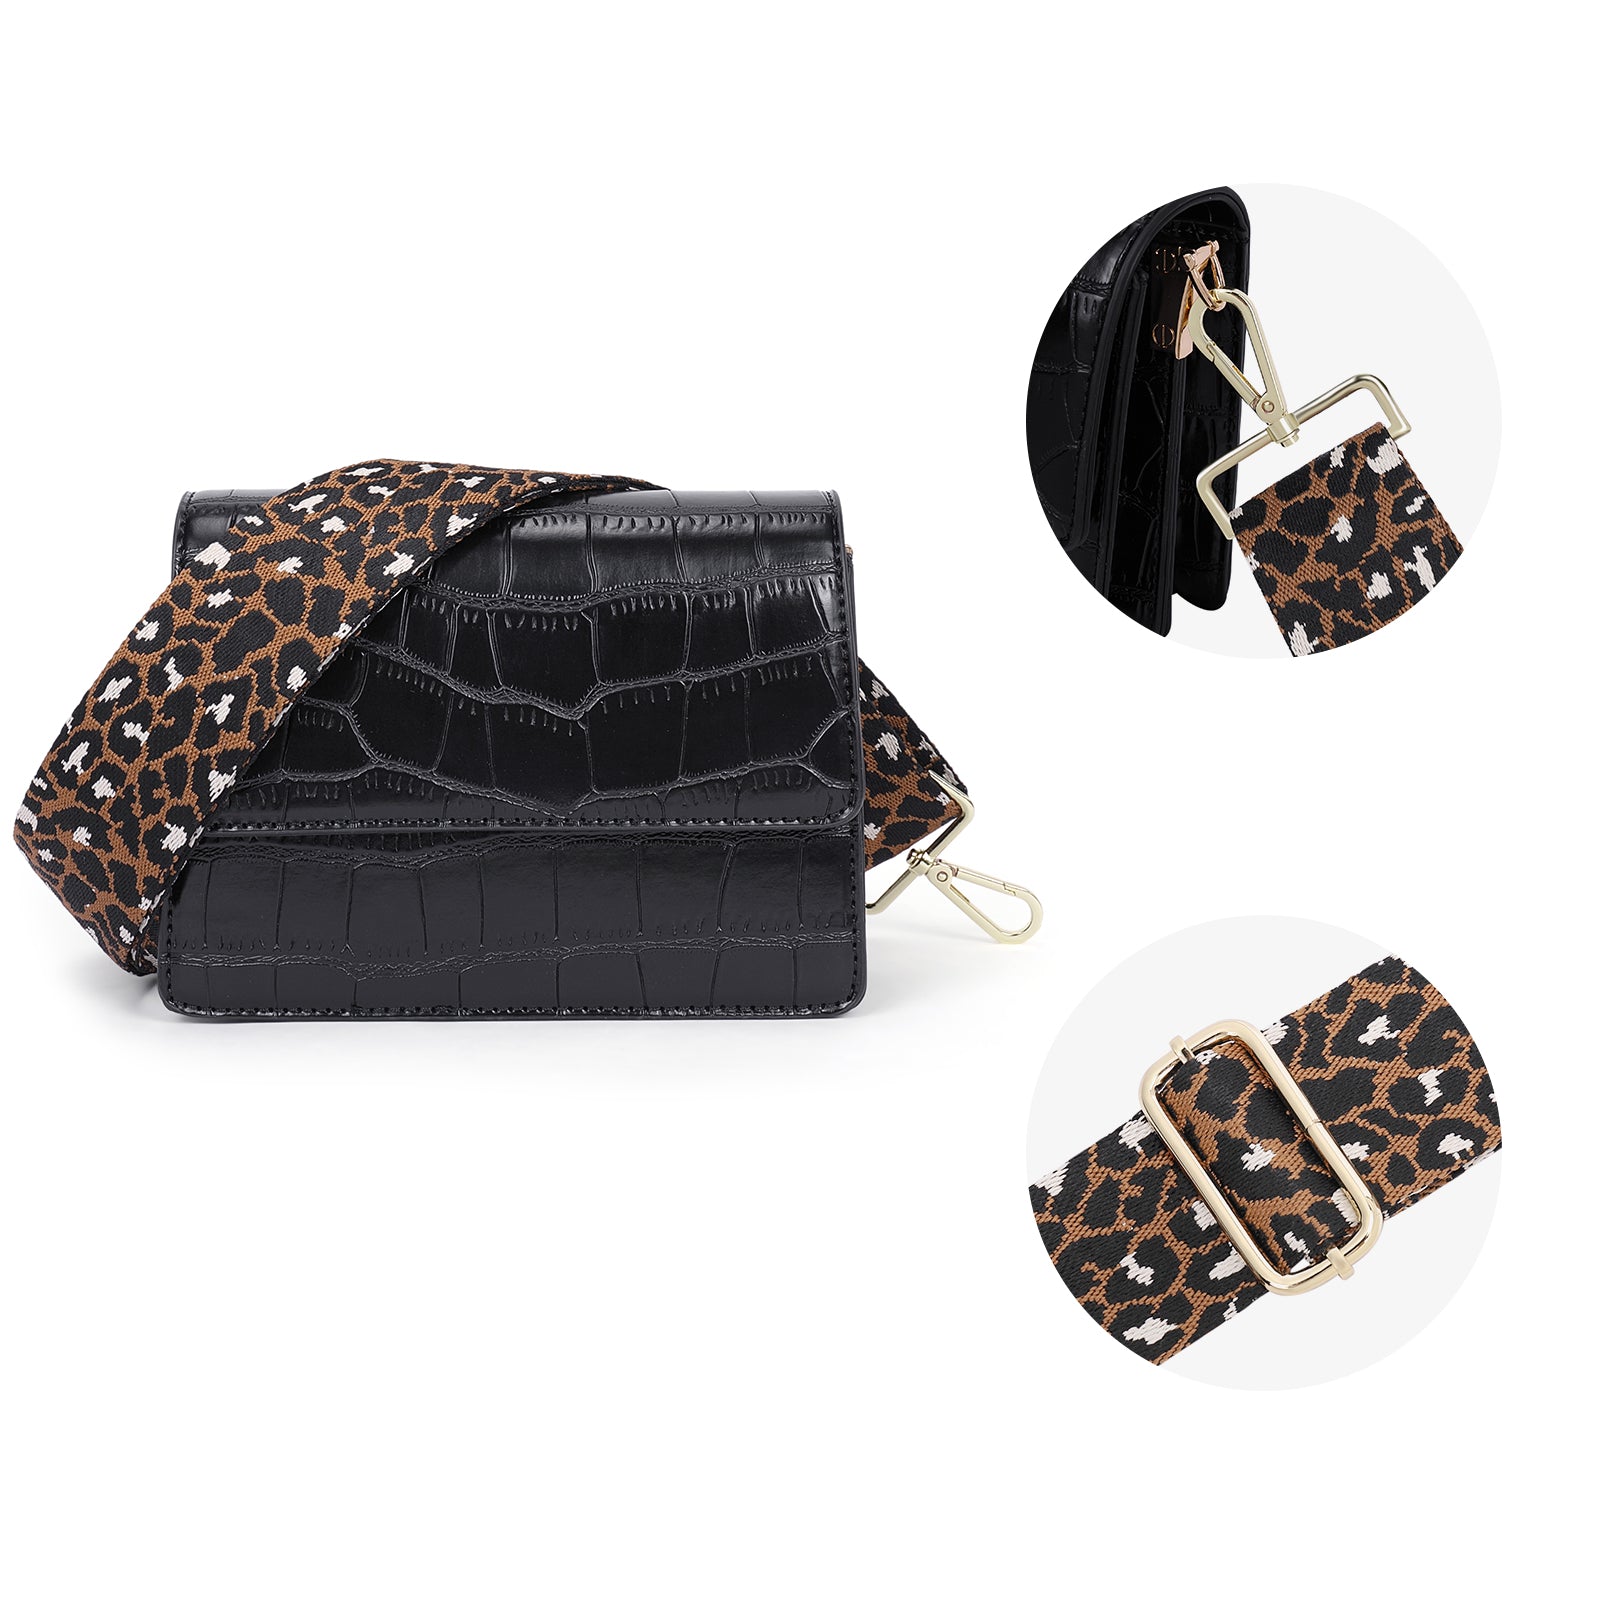 straps for purses replacement louis vuitton